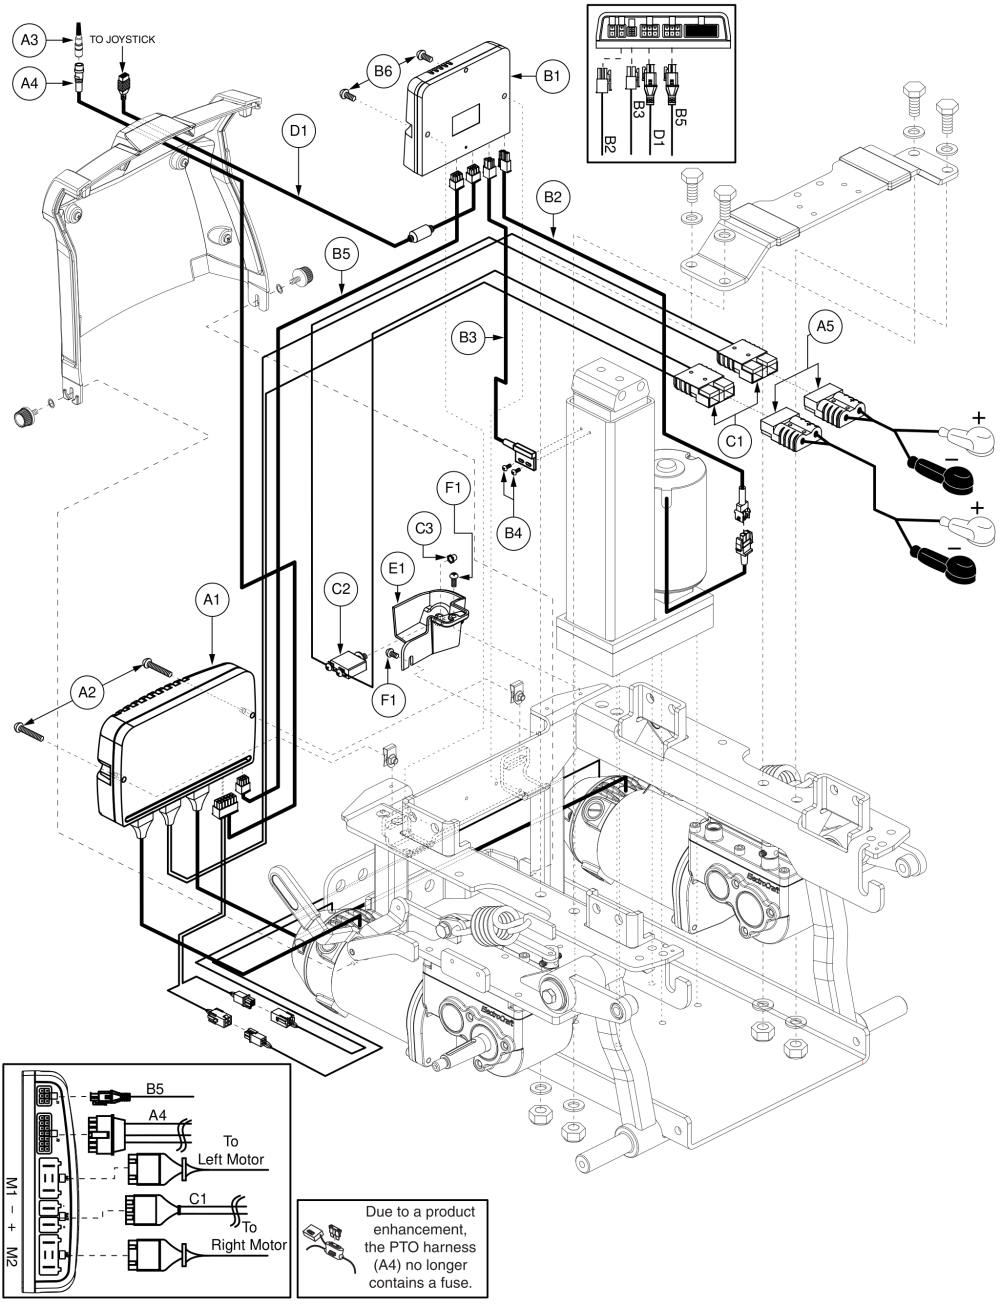 Q-logic, Accu-trac, Power Seat Thru Joystick, Electronics Assy, Q6 Edge X parts diagram